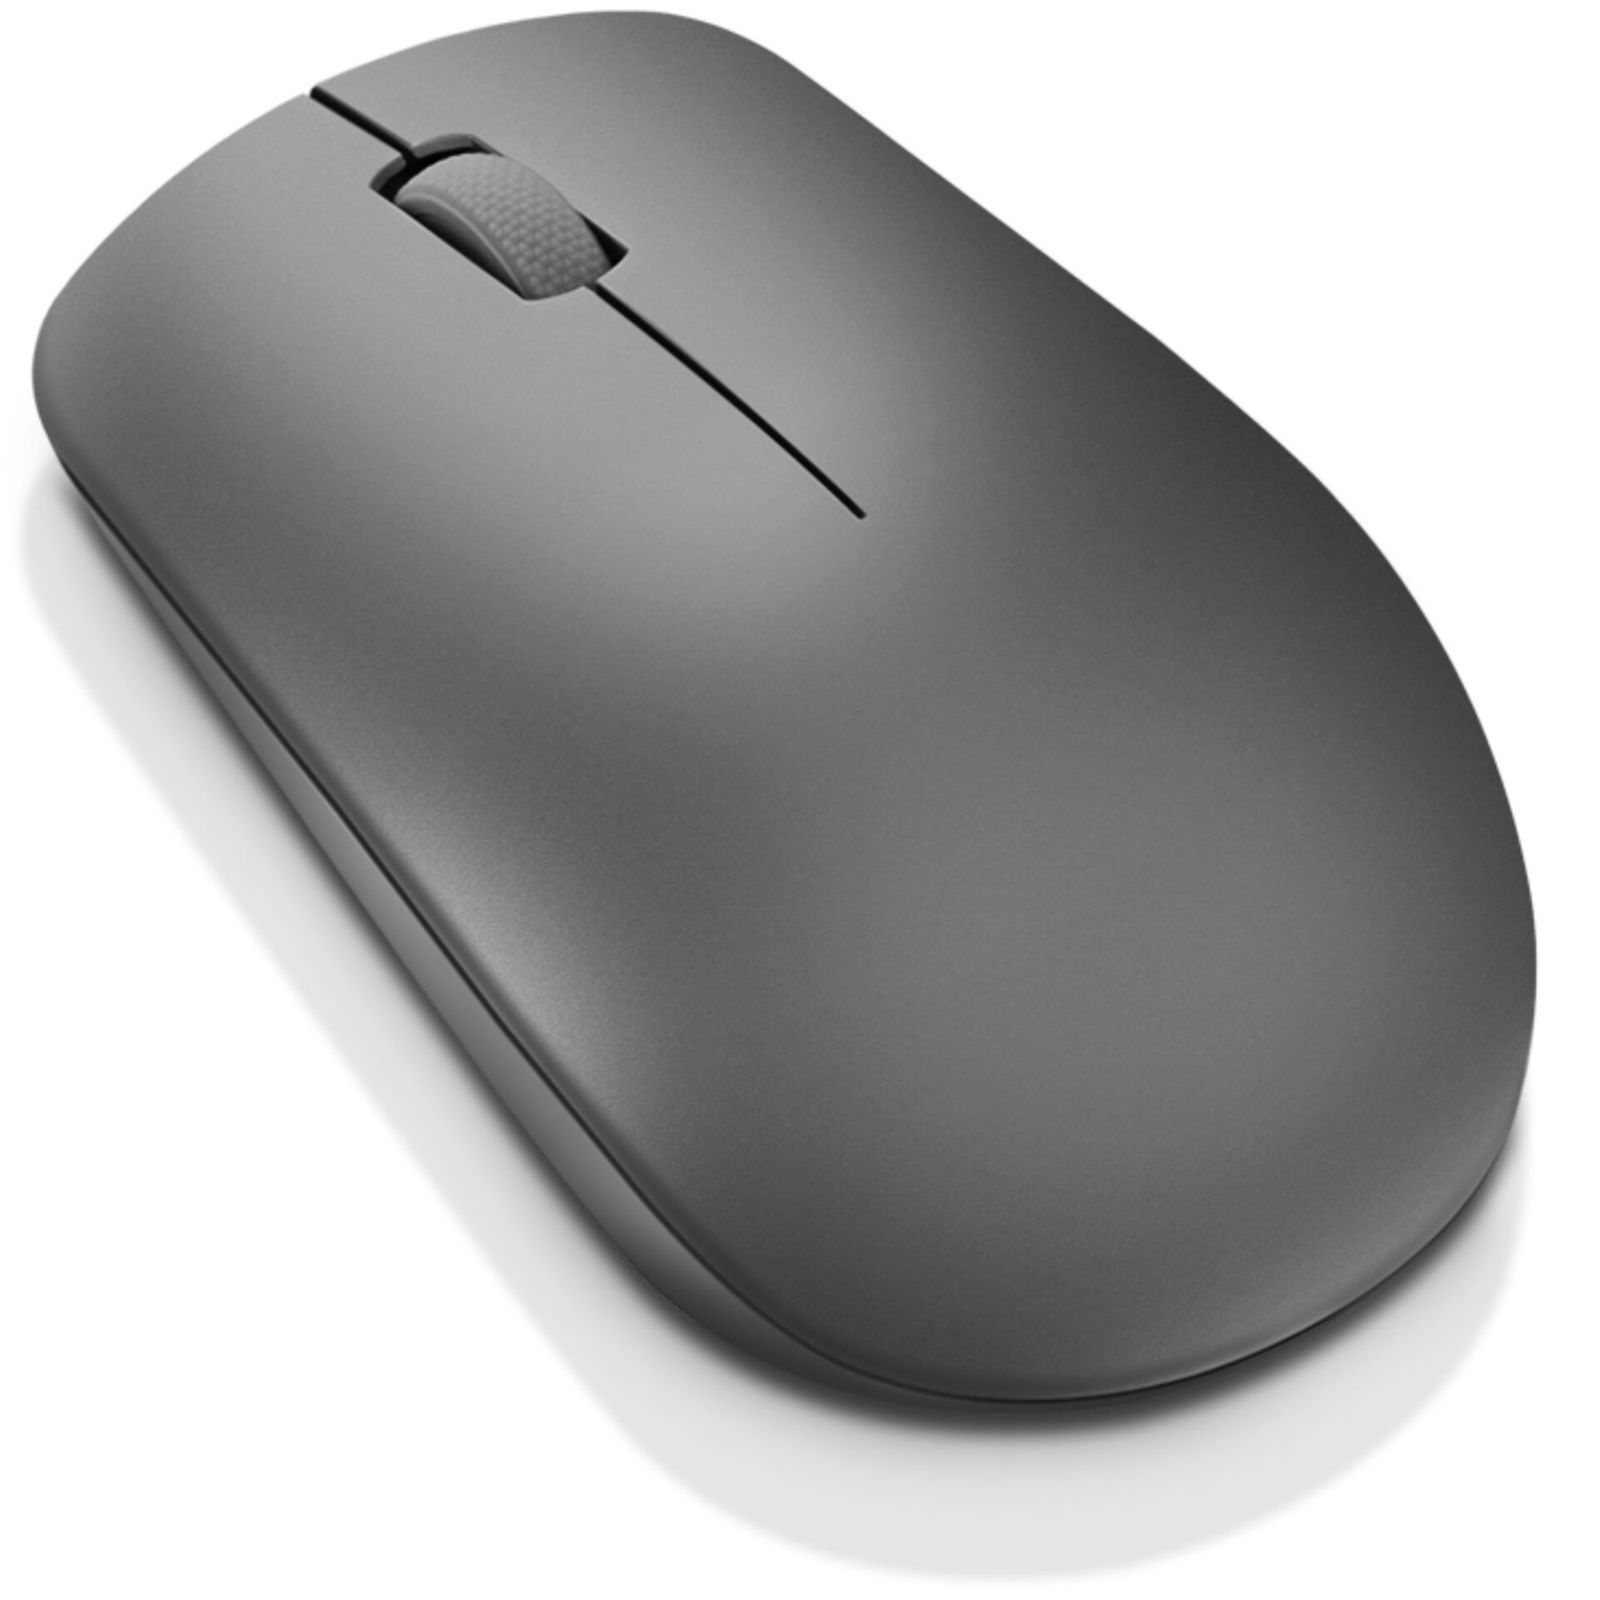 Lenovo 530 Wireless Mouse graffite